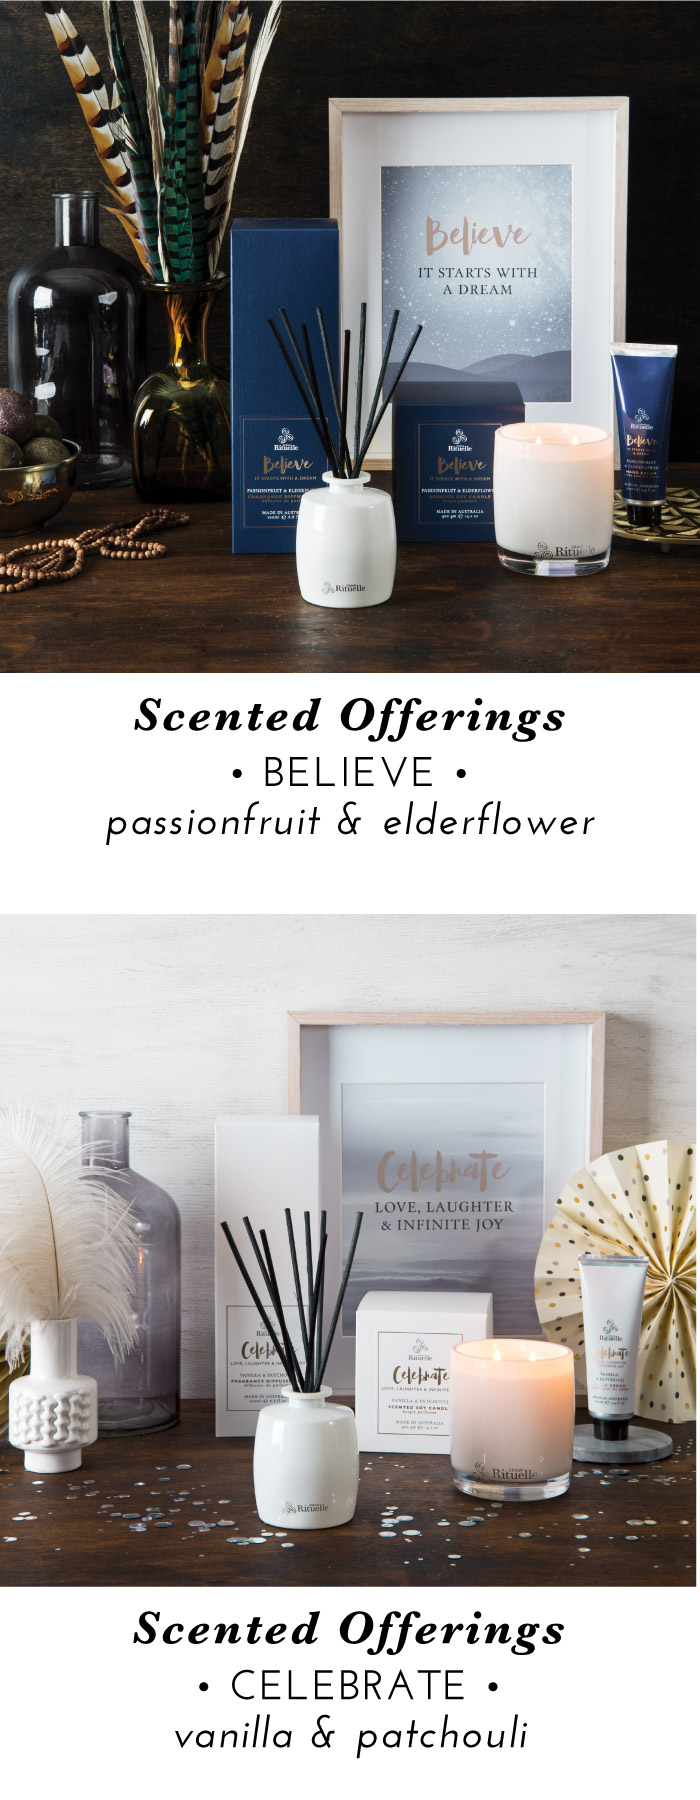 Believe: passionfruit & elderflower. Celebrate: Vanilla & Patchouli